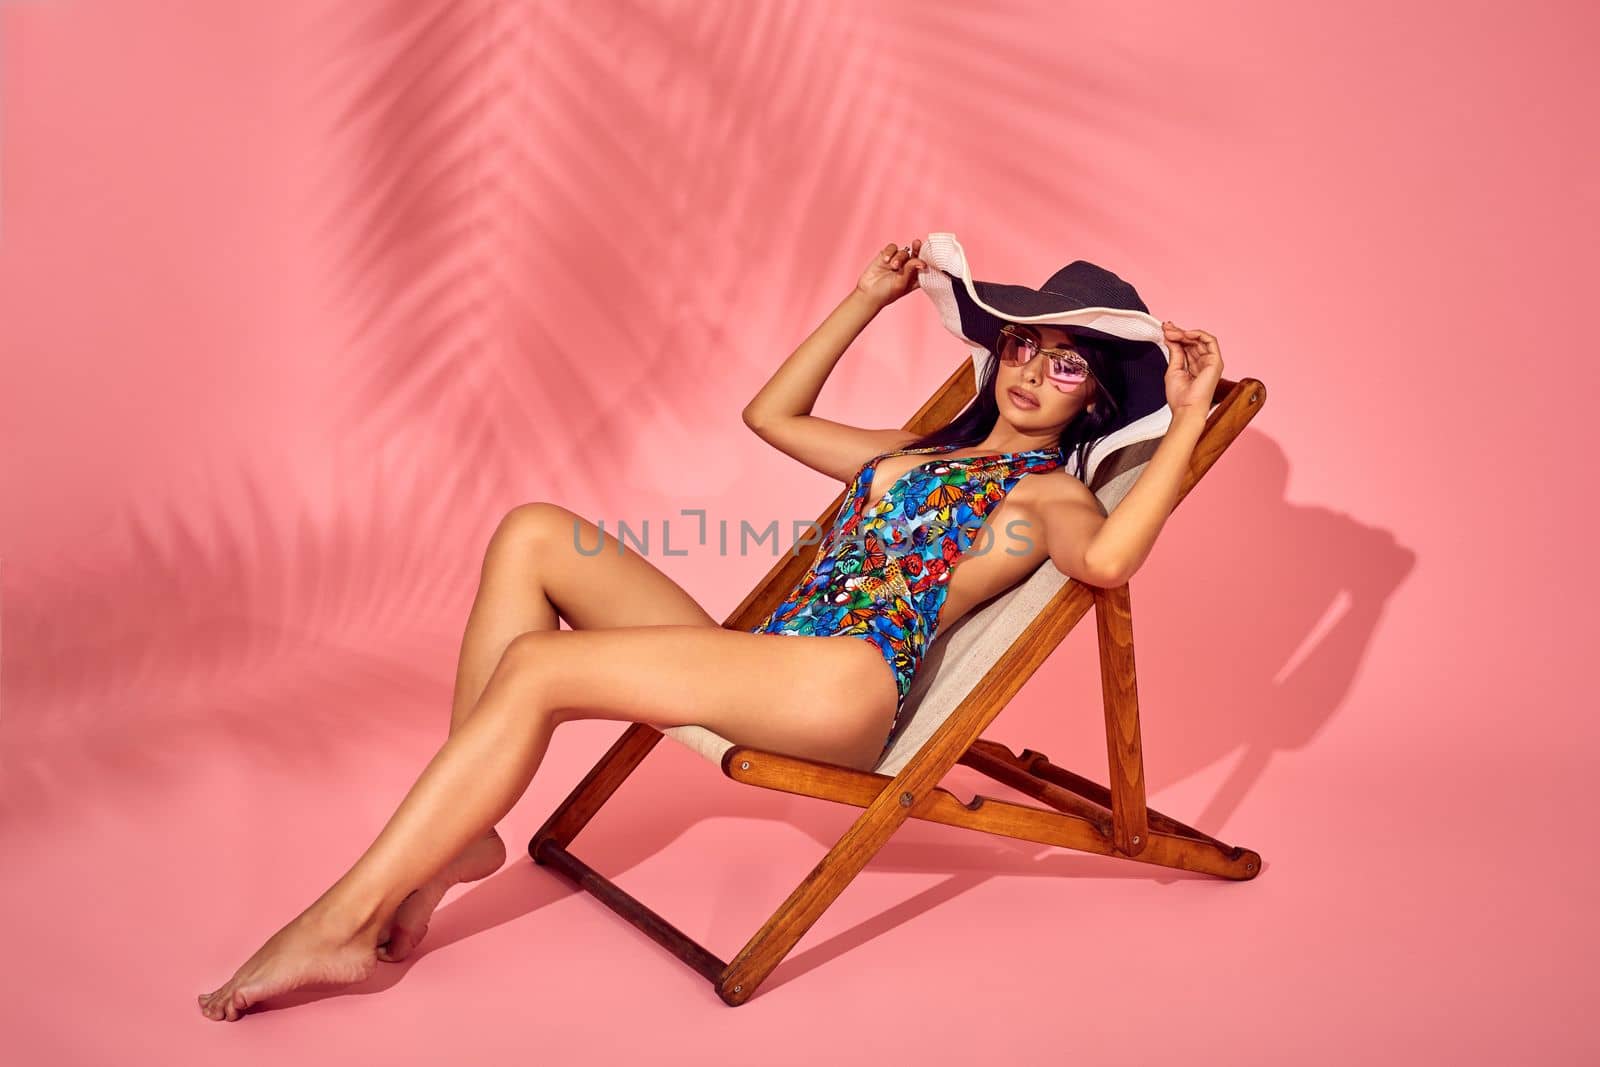 Summer lifestyle fashion portrait of young stunning woman on a lounge chair, pink background, studio shot. Enjoying life on the beach chaise. Wearing stylish sunglasses, bikini. Sunbathing.